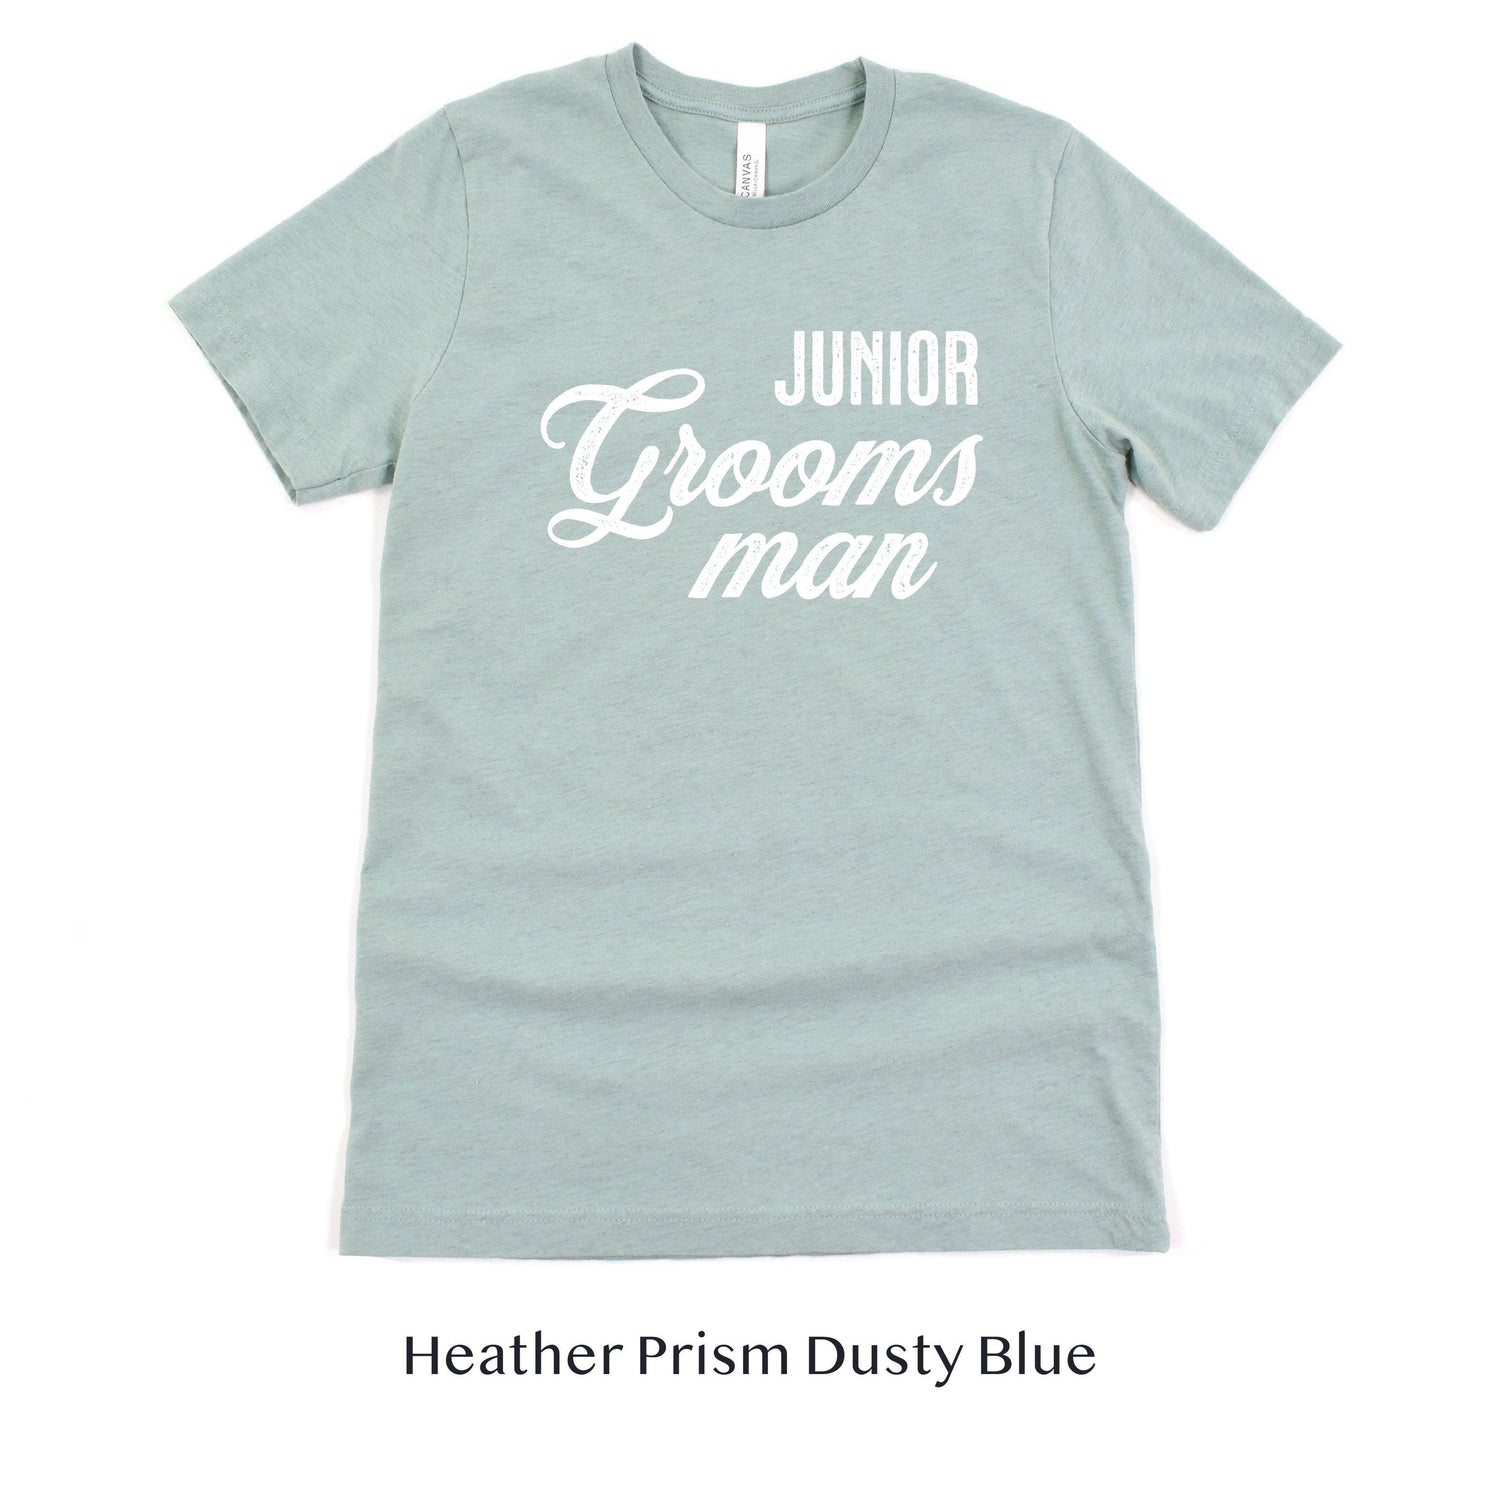 Jr Groomsman - Vintage Romance Wedding Party - Junior - Unisex t-shirt by Oaklynn Lane